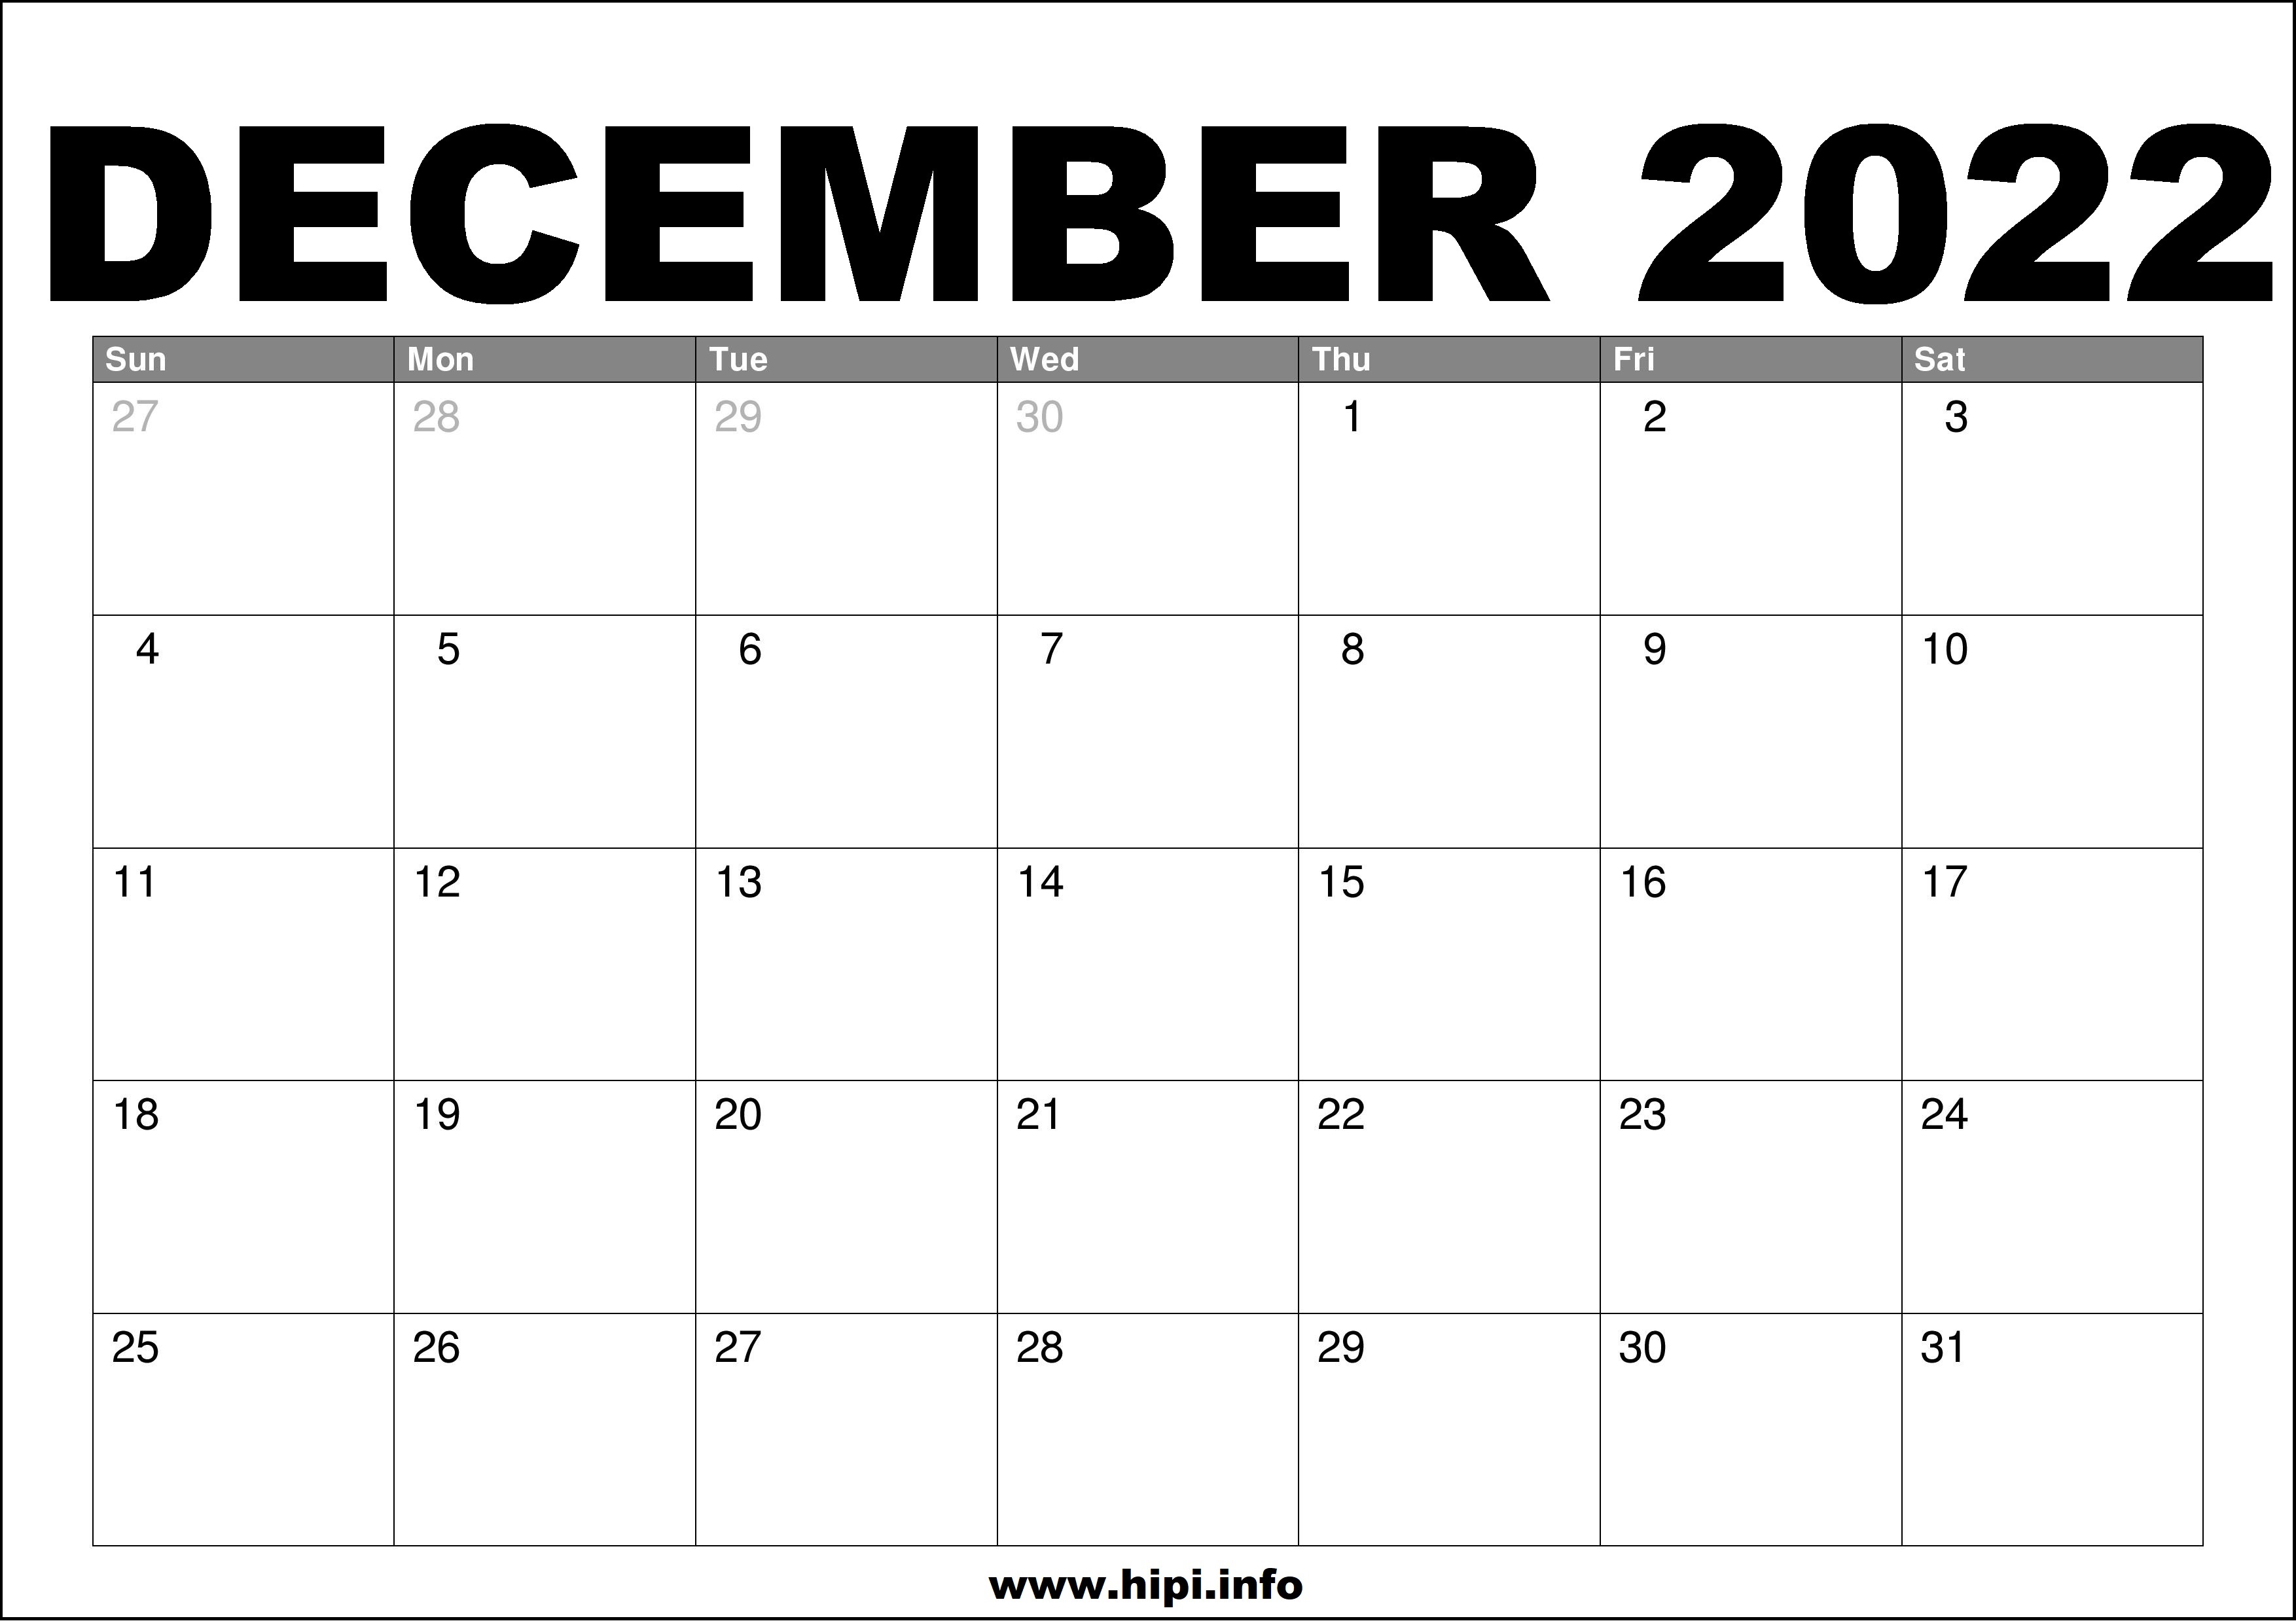 November And December 2022 Calendar Printable December 2022 Calendar Printable Free - Hipi.info | Calendars Printable Free